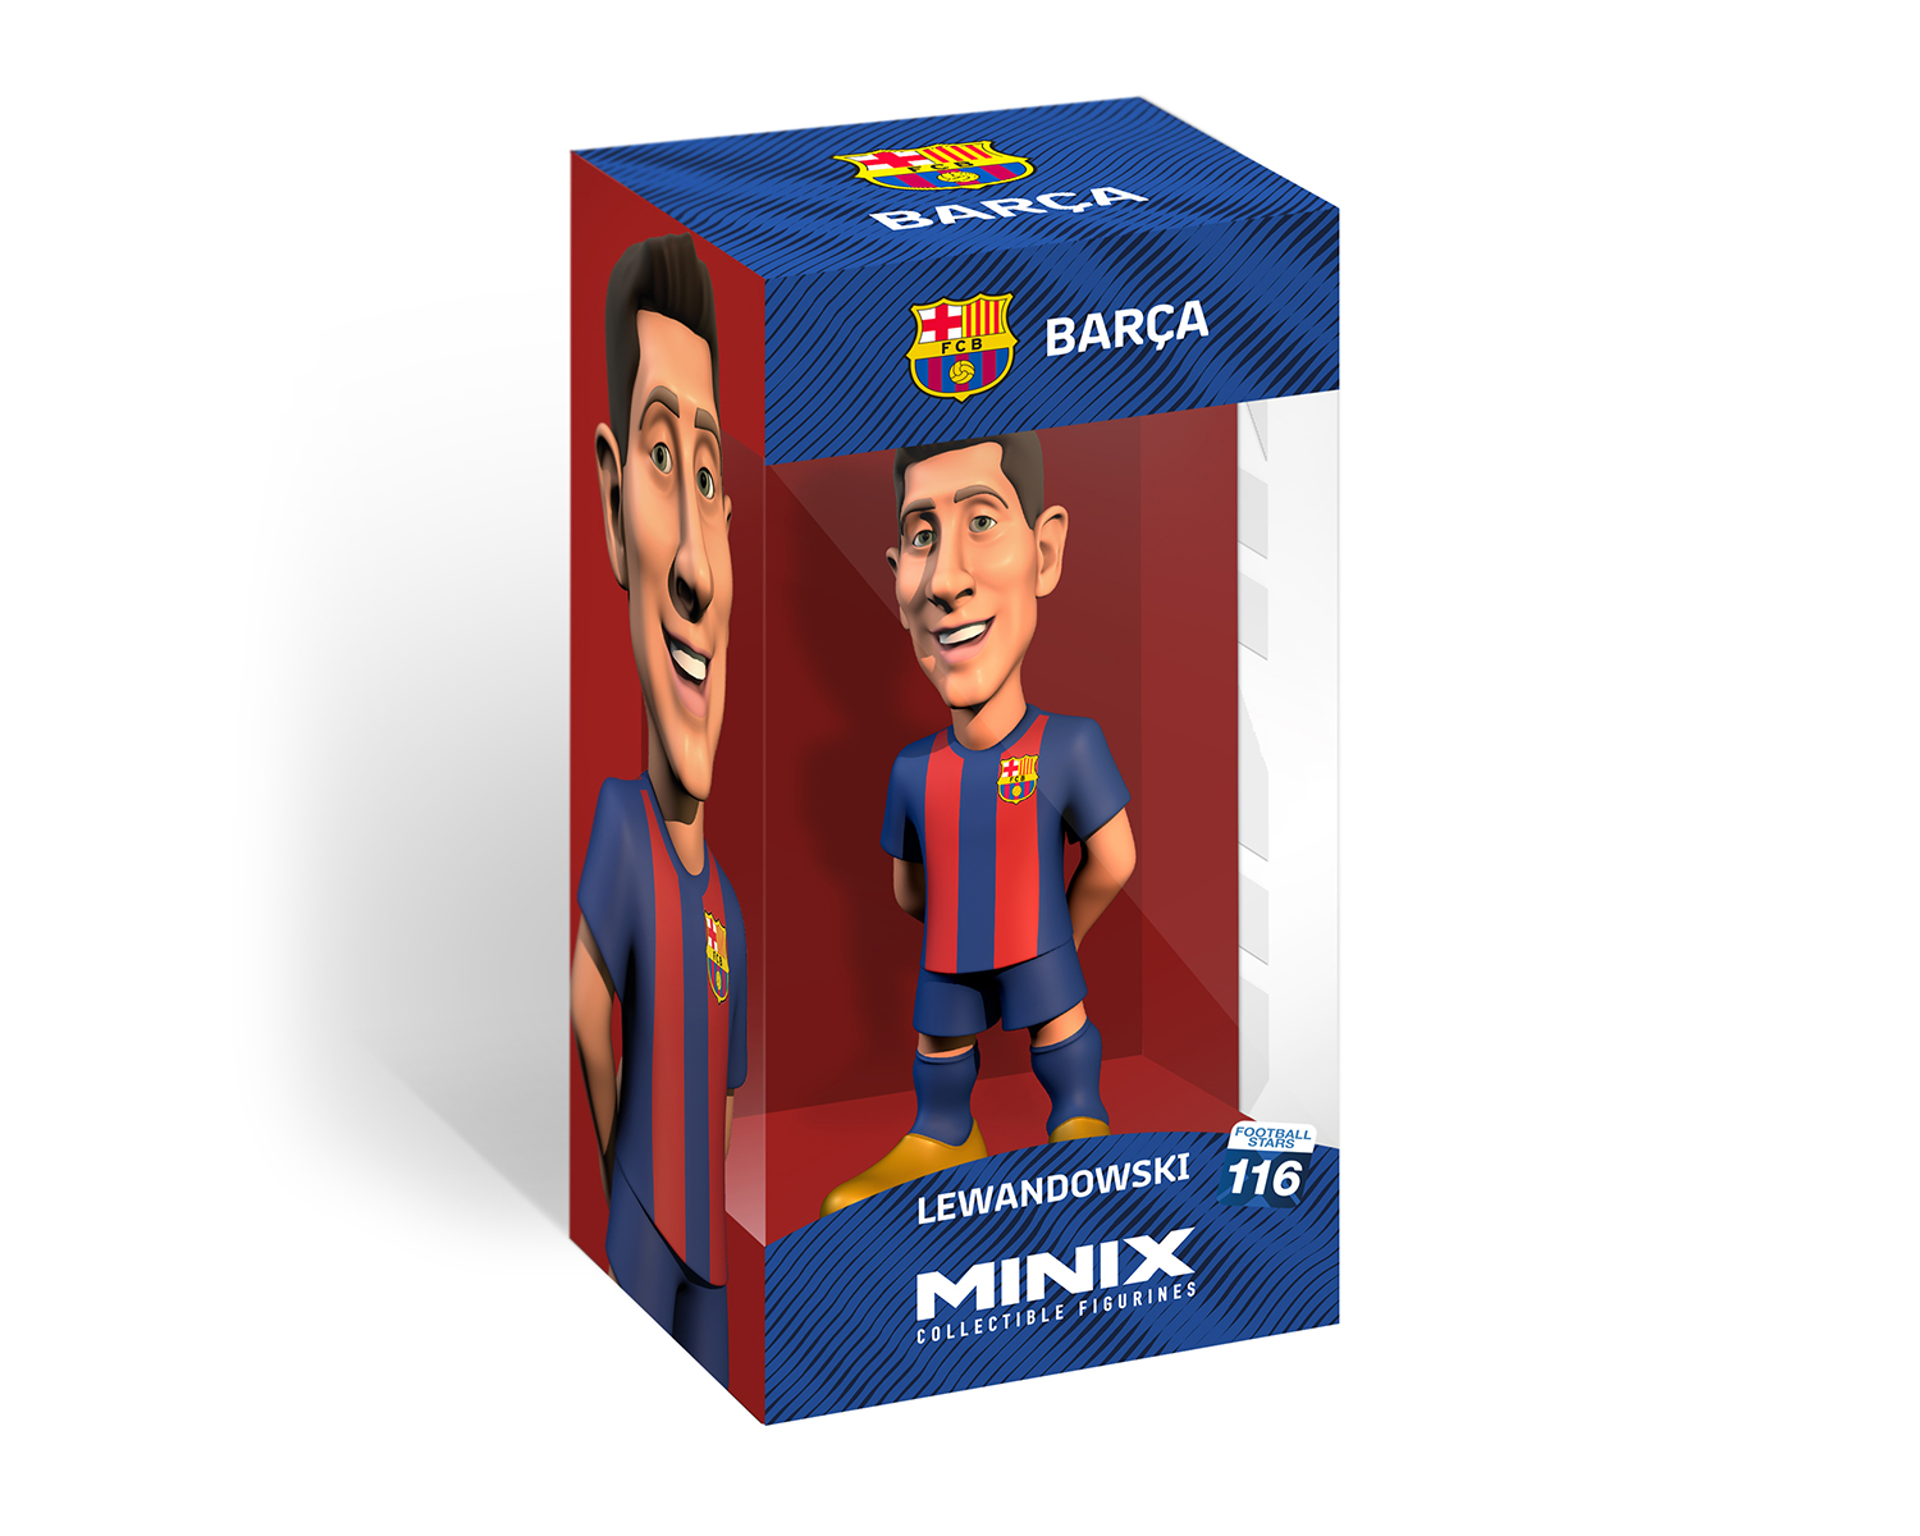 Figurine Minix Robert Lewandowski 12 cm du FC Barcelone